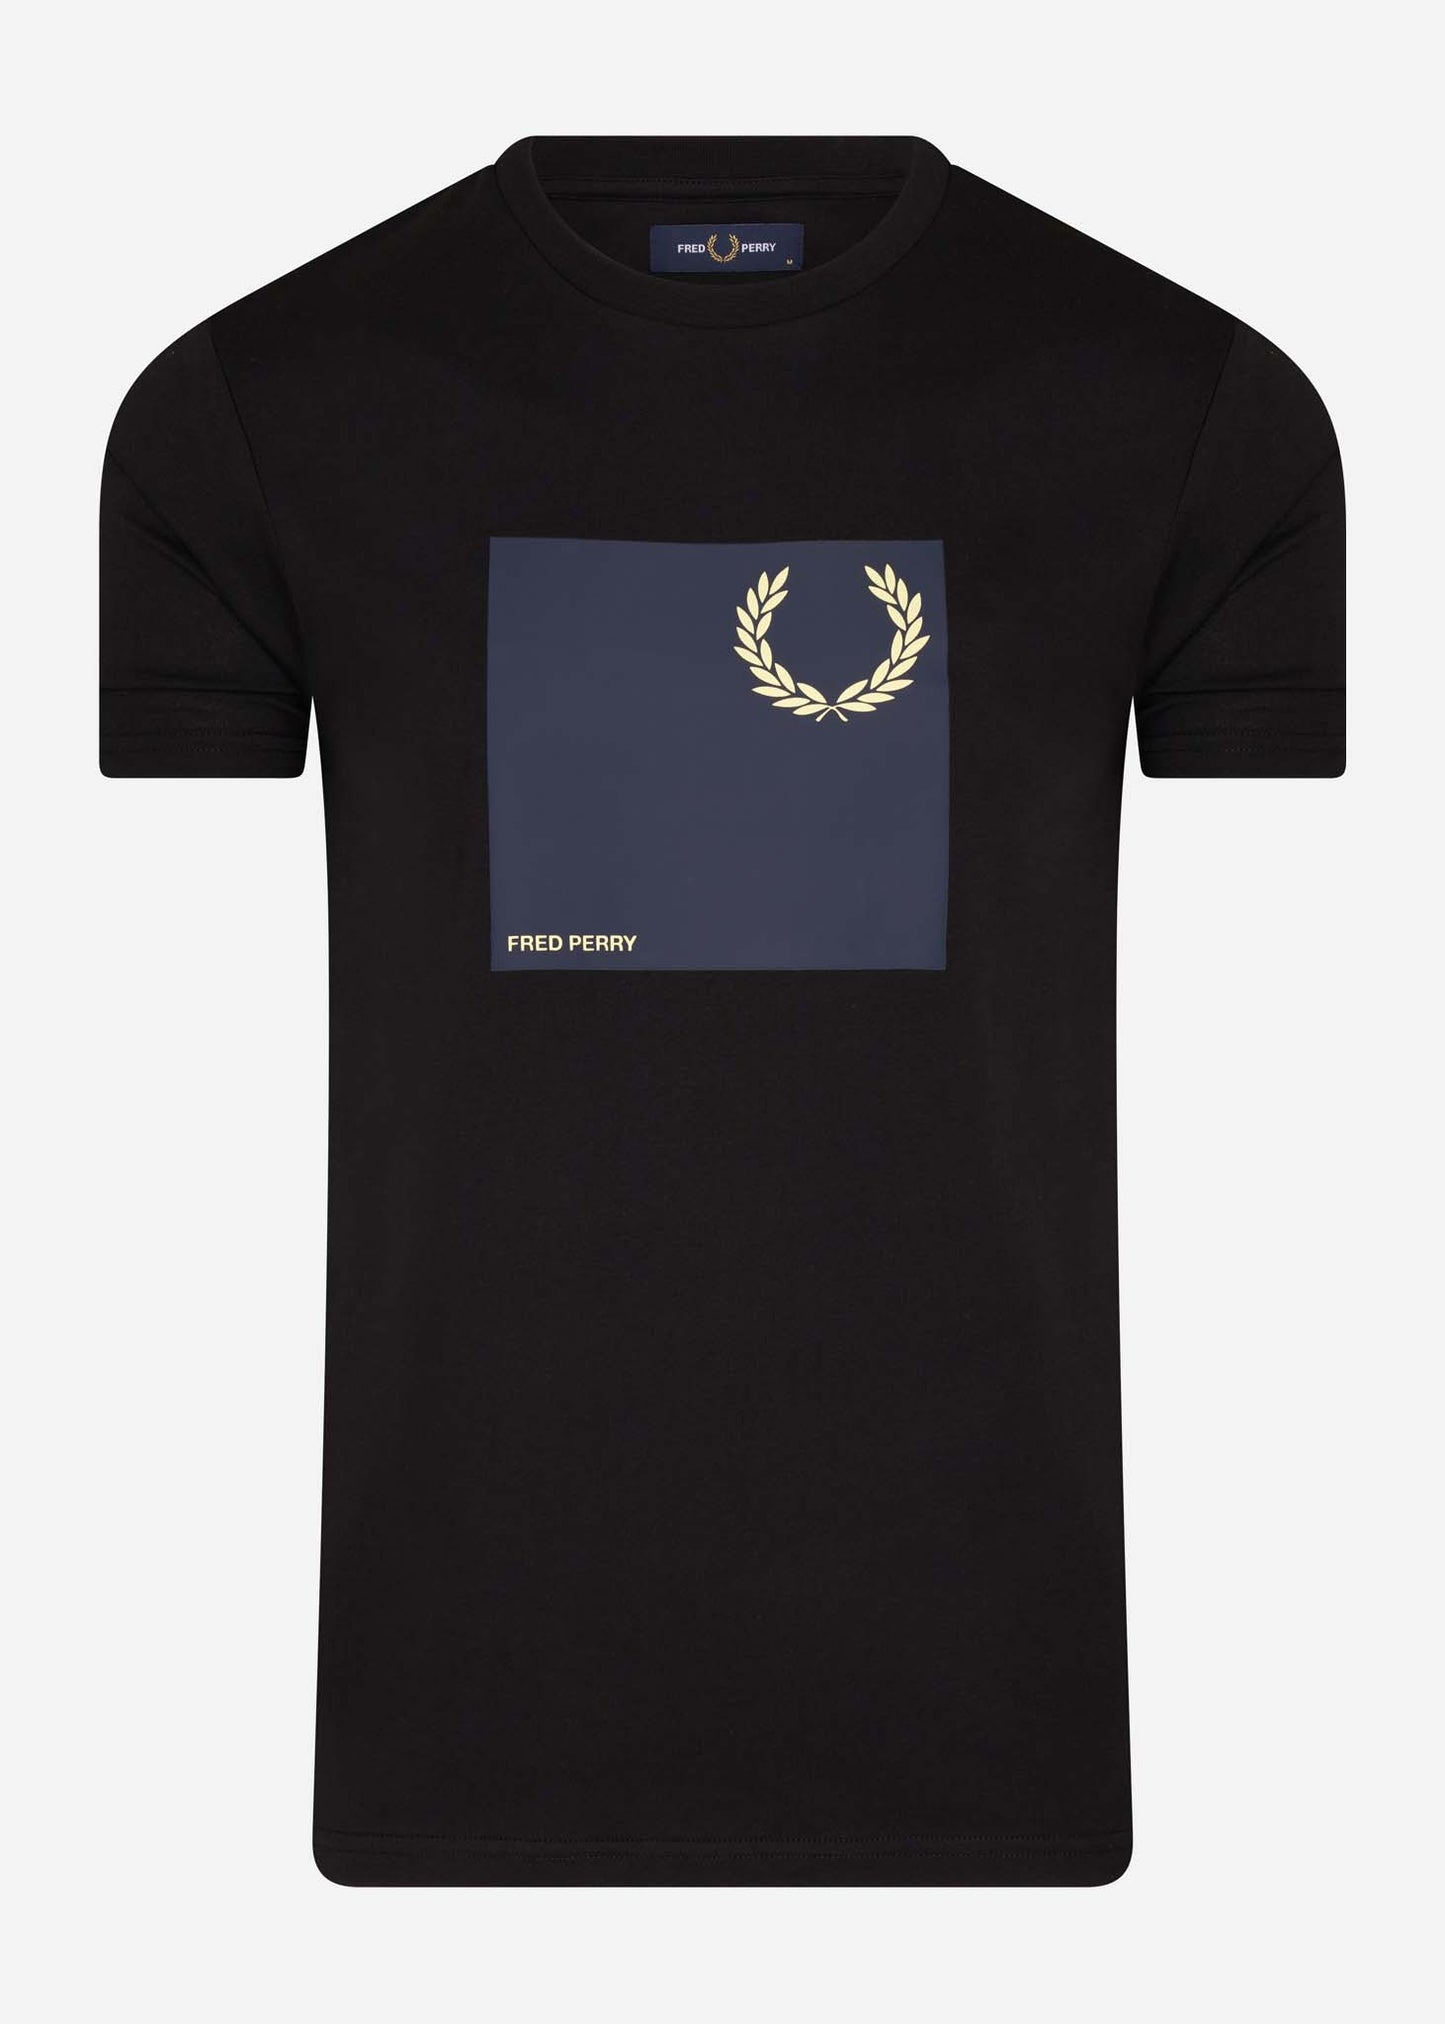 Laurel wreath graphic t-shirt q2 - black